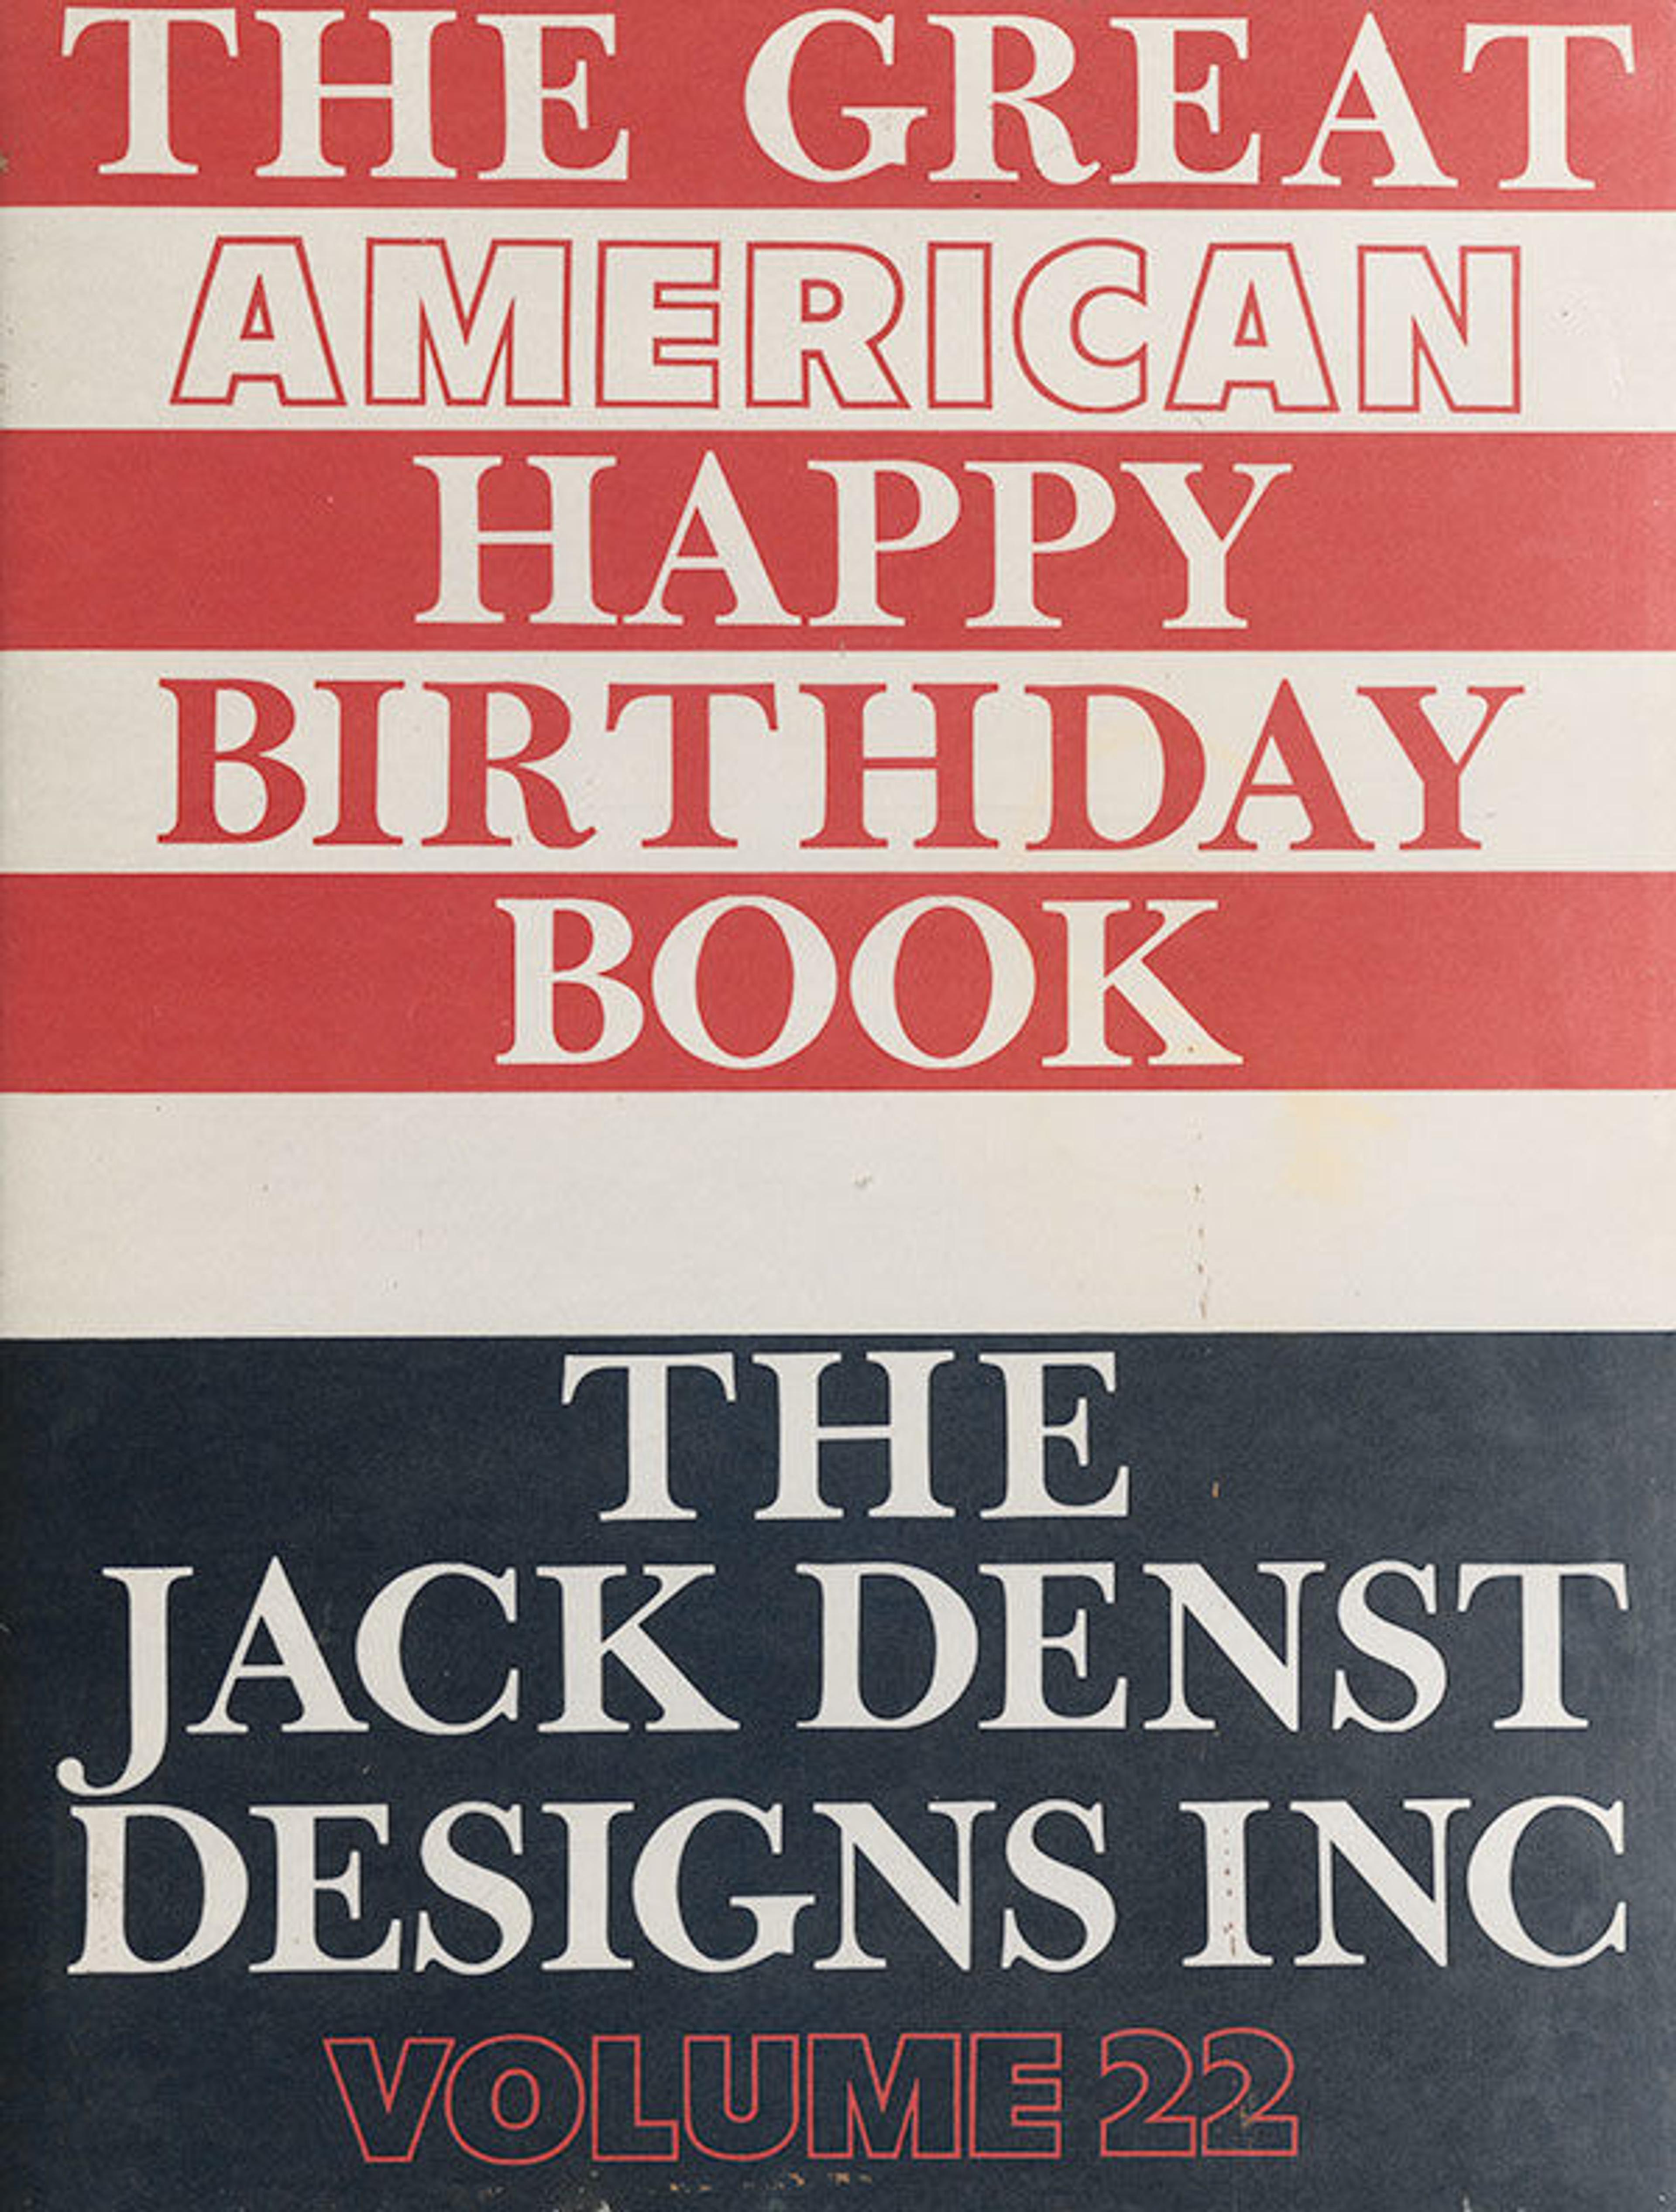 Great American Happy Birthday Book